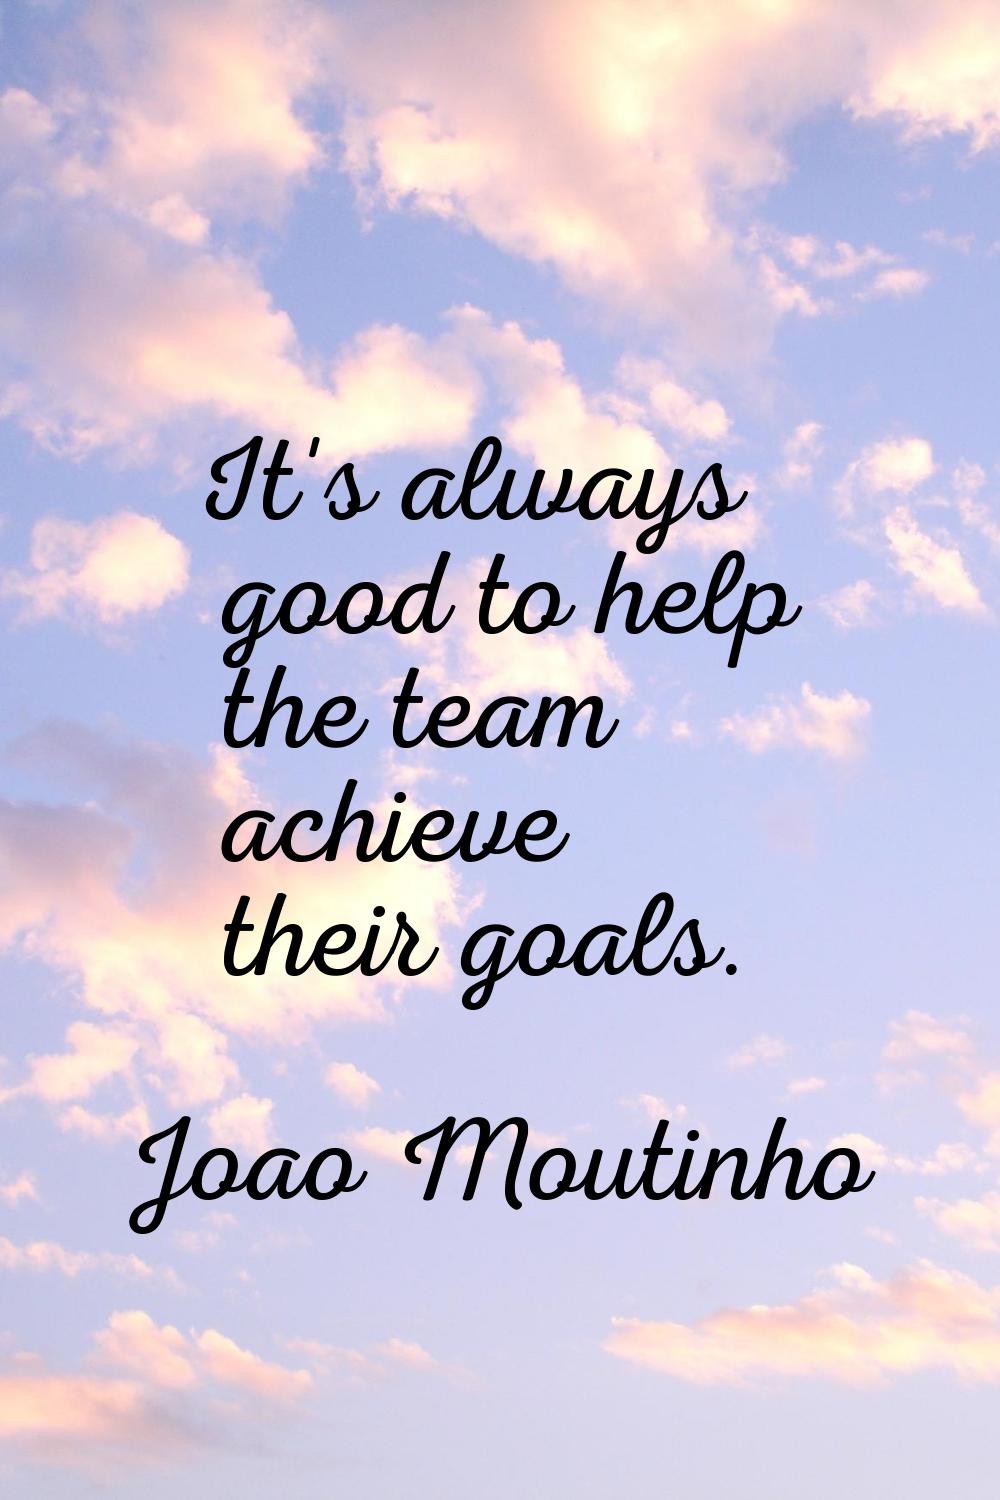 It's always good to help the team achieve their goals.